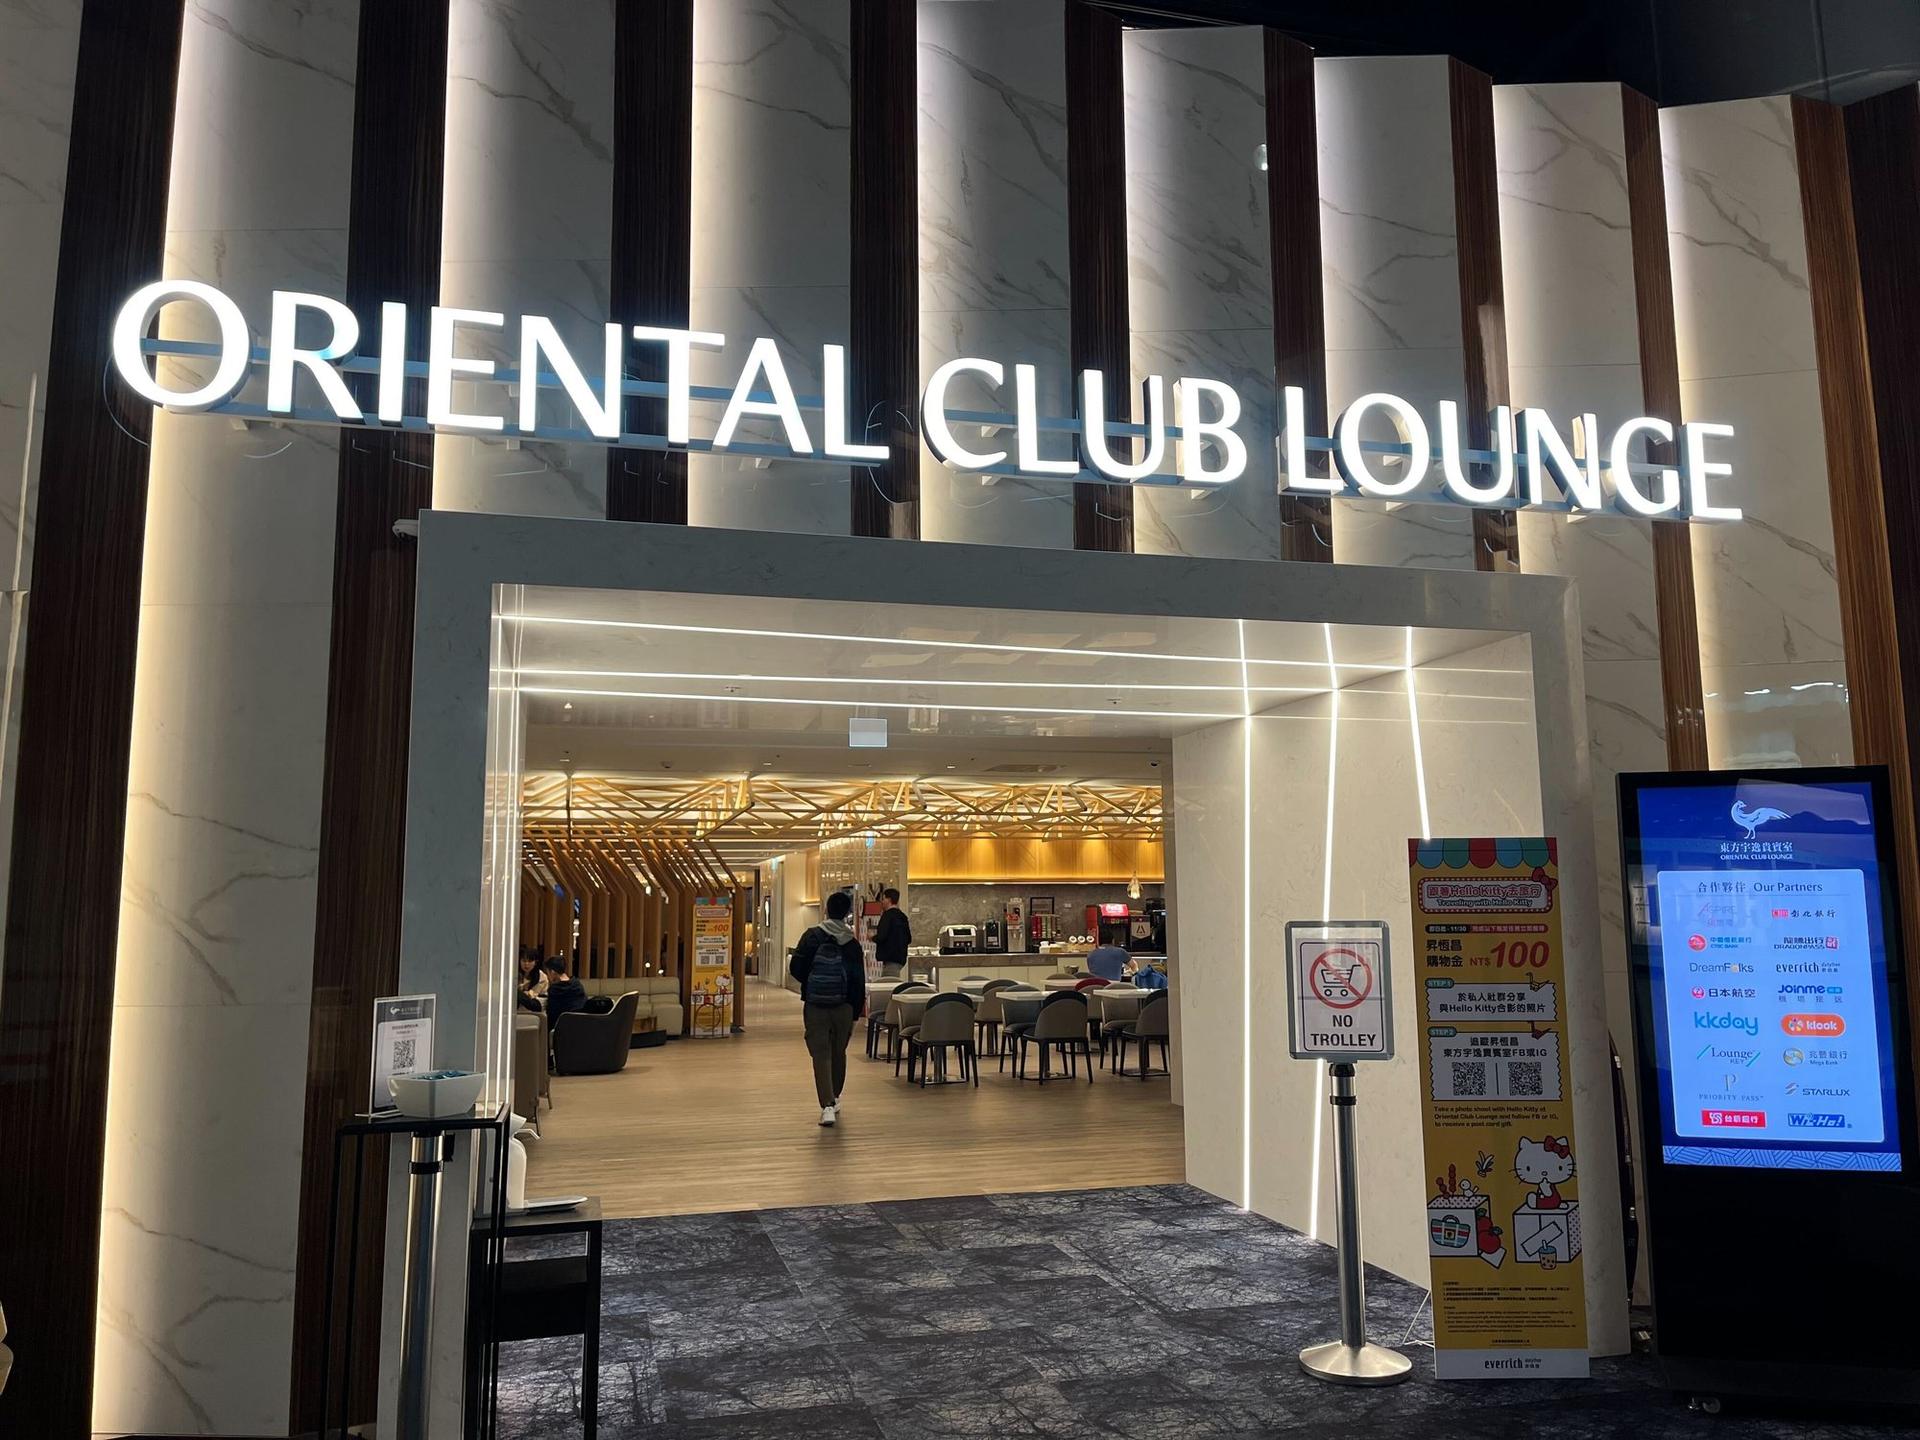 Oriental Club Lounge image 30 of 44